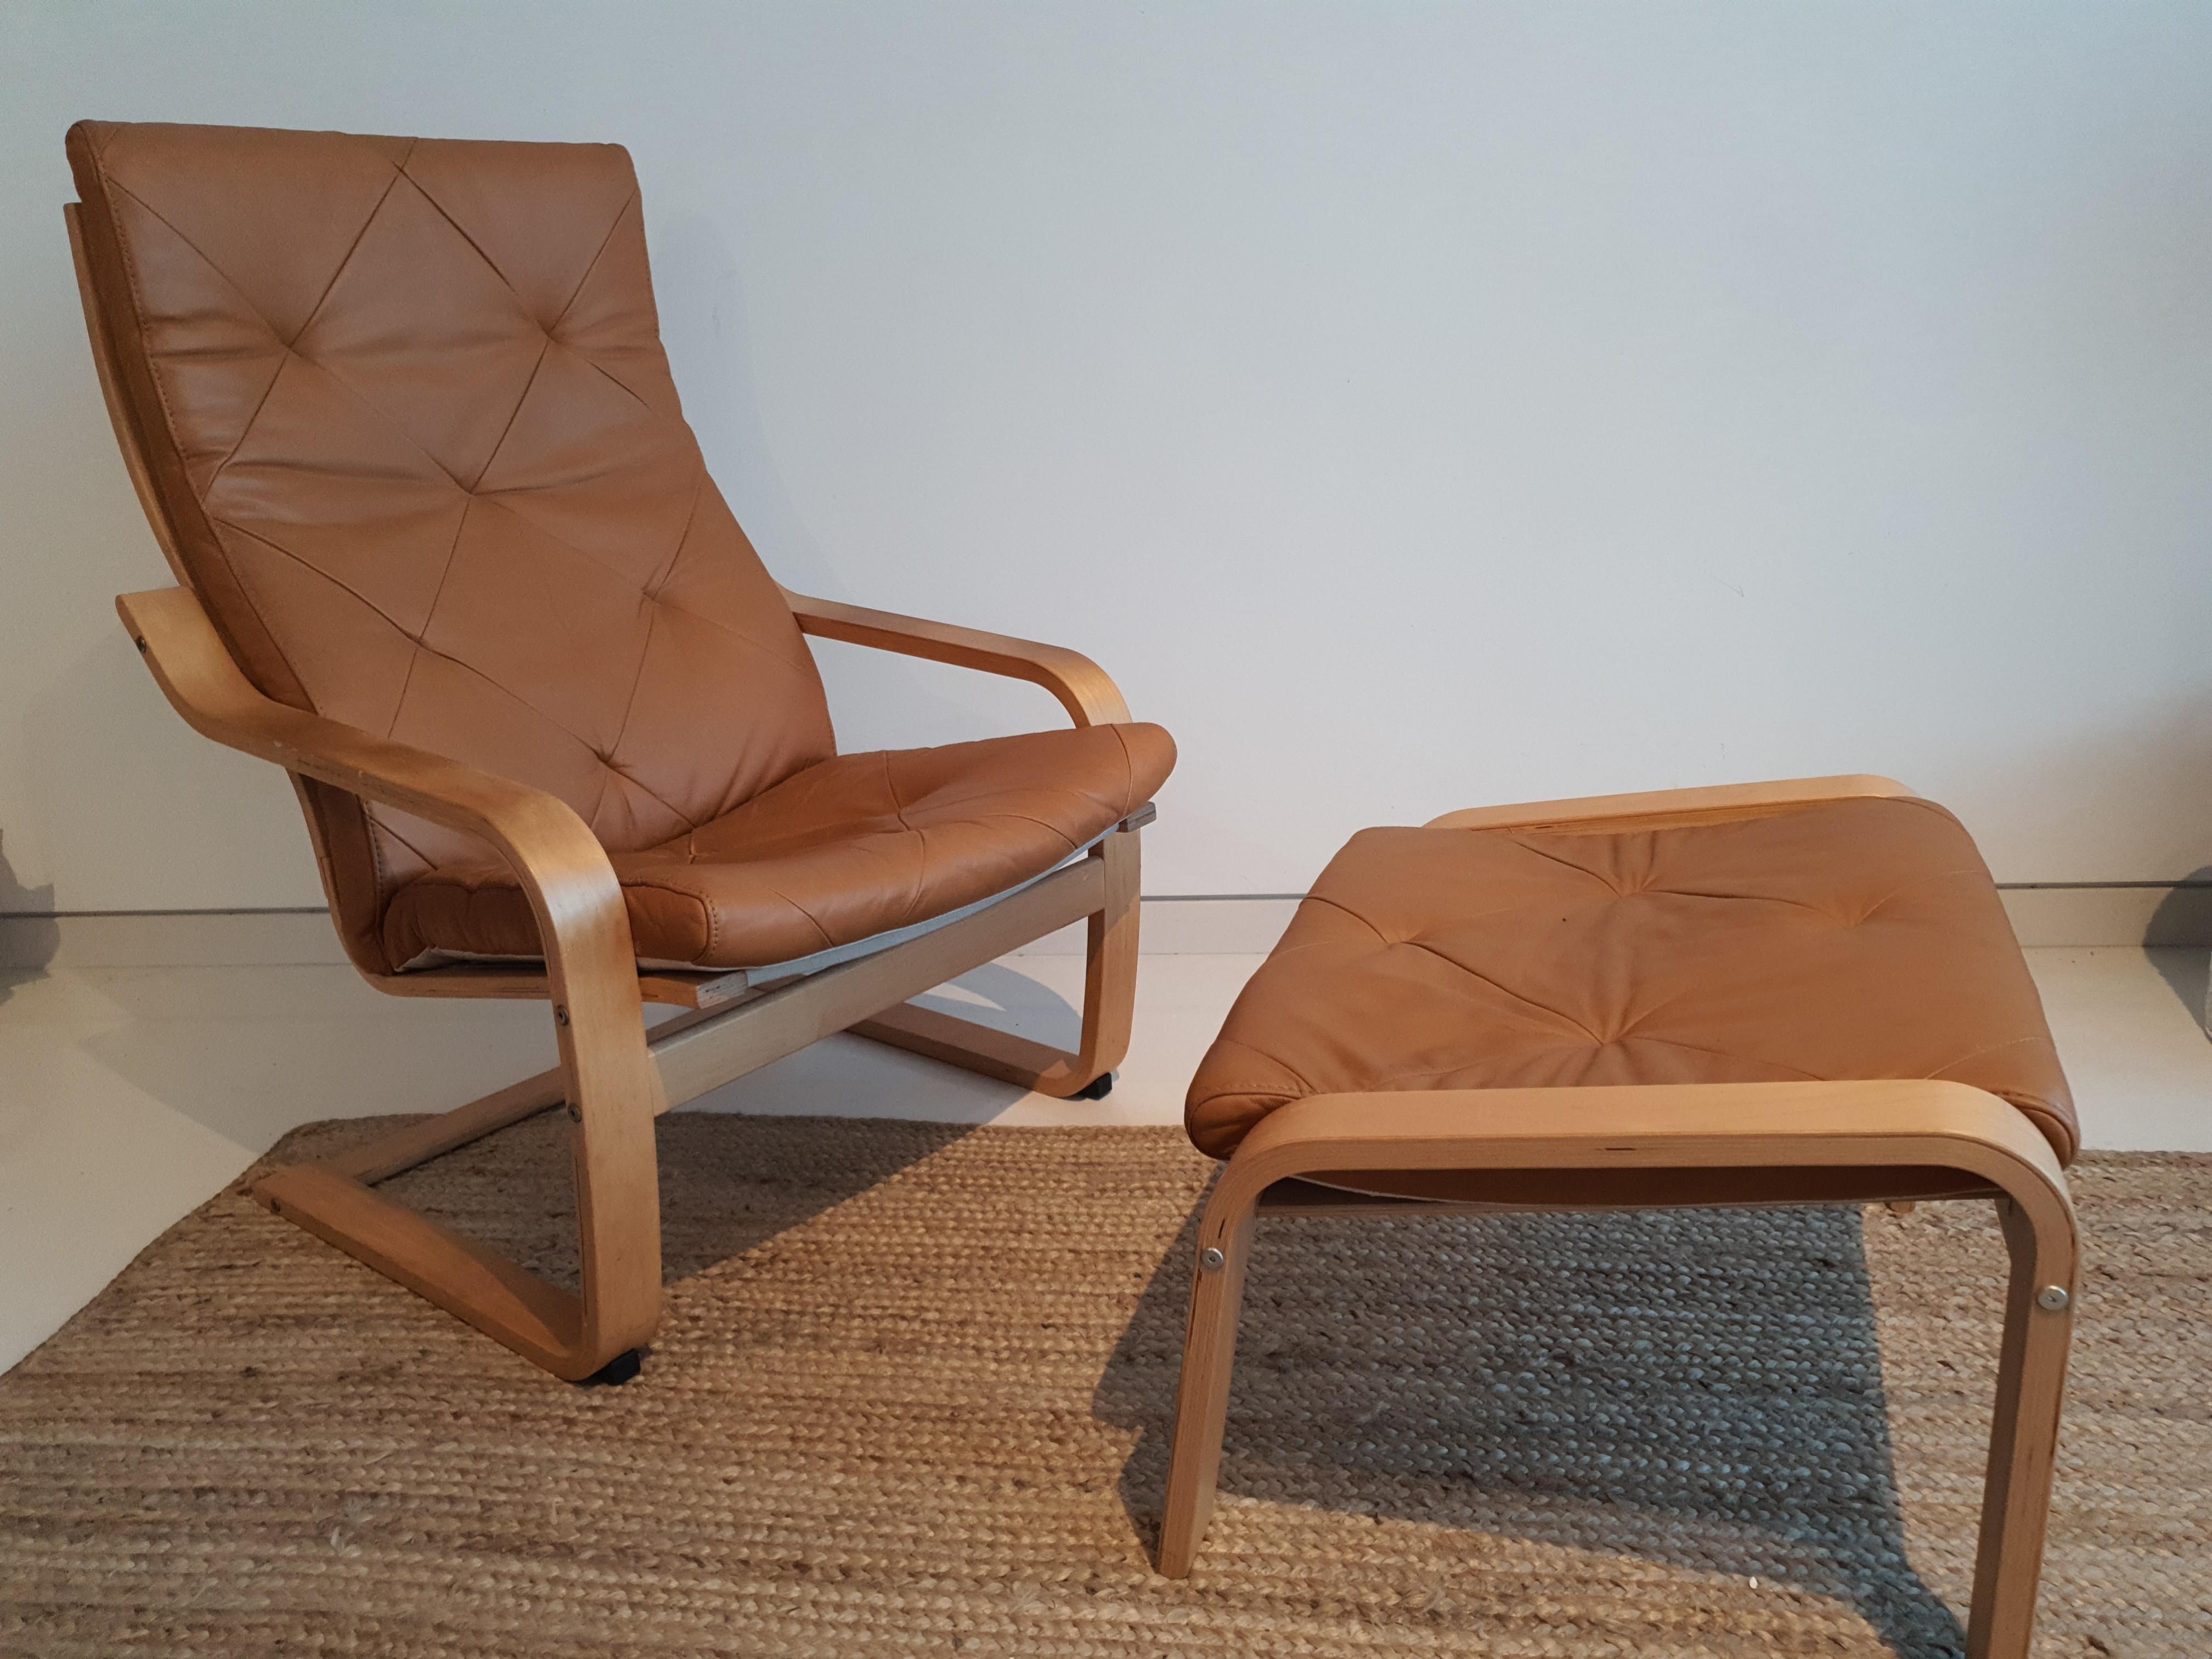 Ikea Chair And Ottoman Poang / Ikea Poang Chair And Ottoman This You